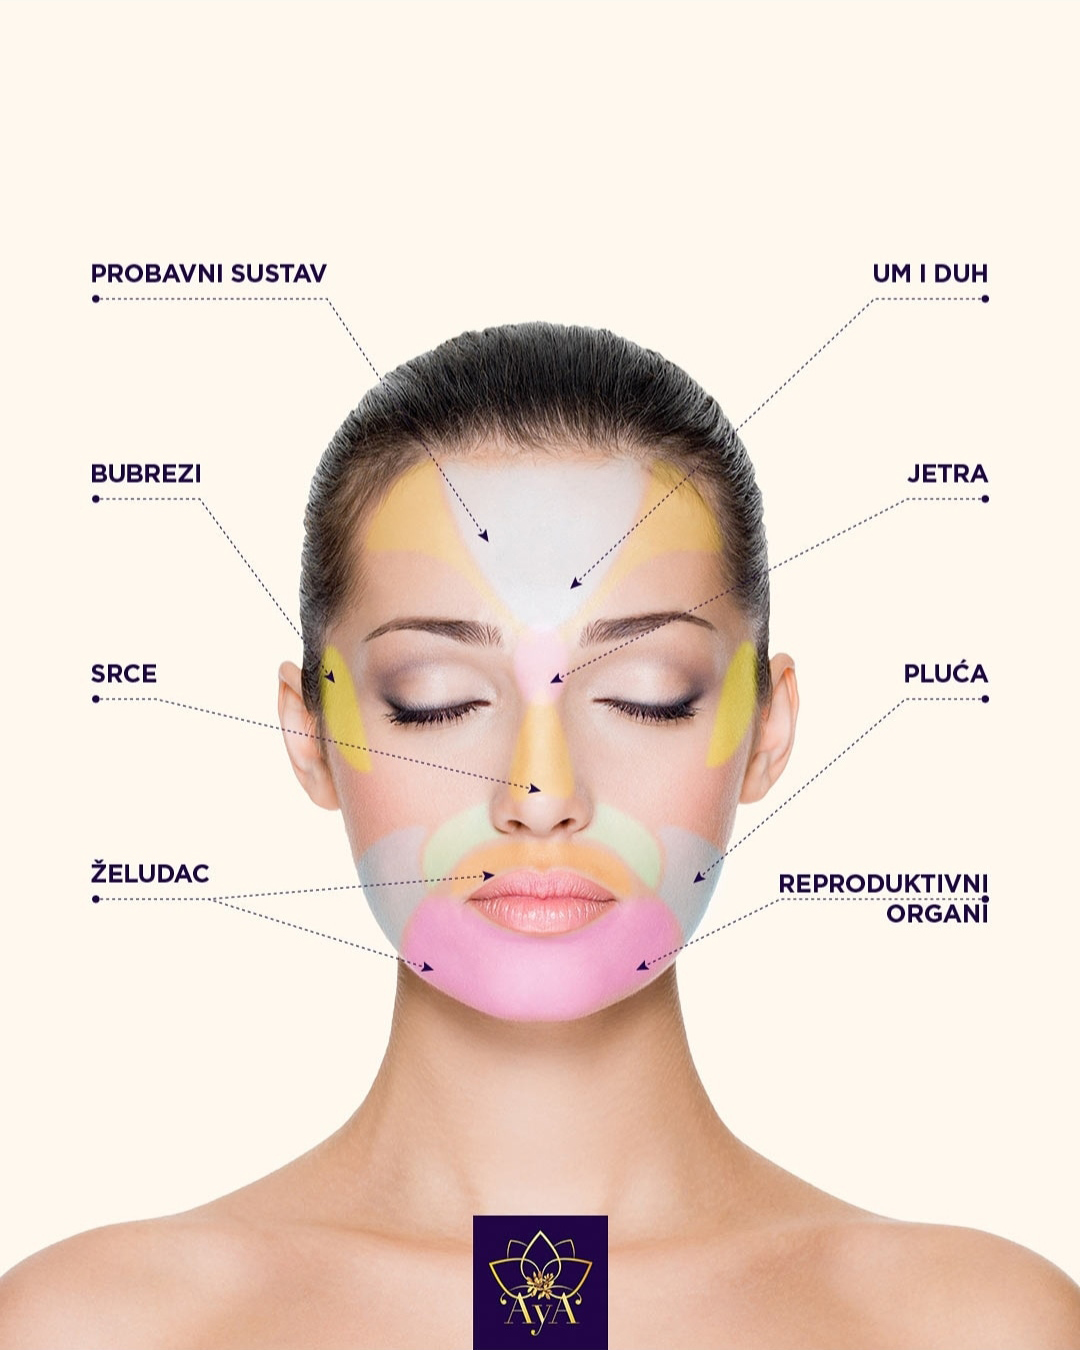 Kinesko „mapiranje“ lica Mien Shiang – prepoznajte zdravstvene probleme iščitavanjem znakova na koži